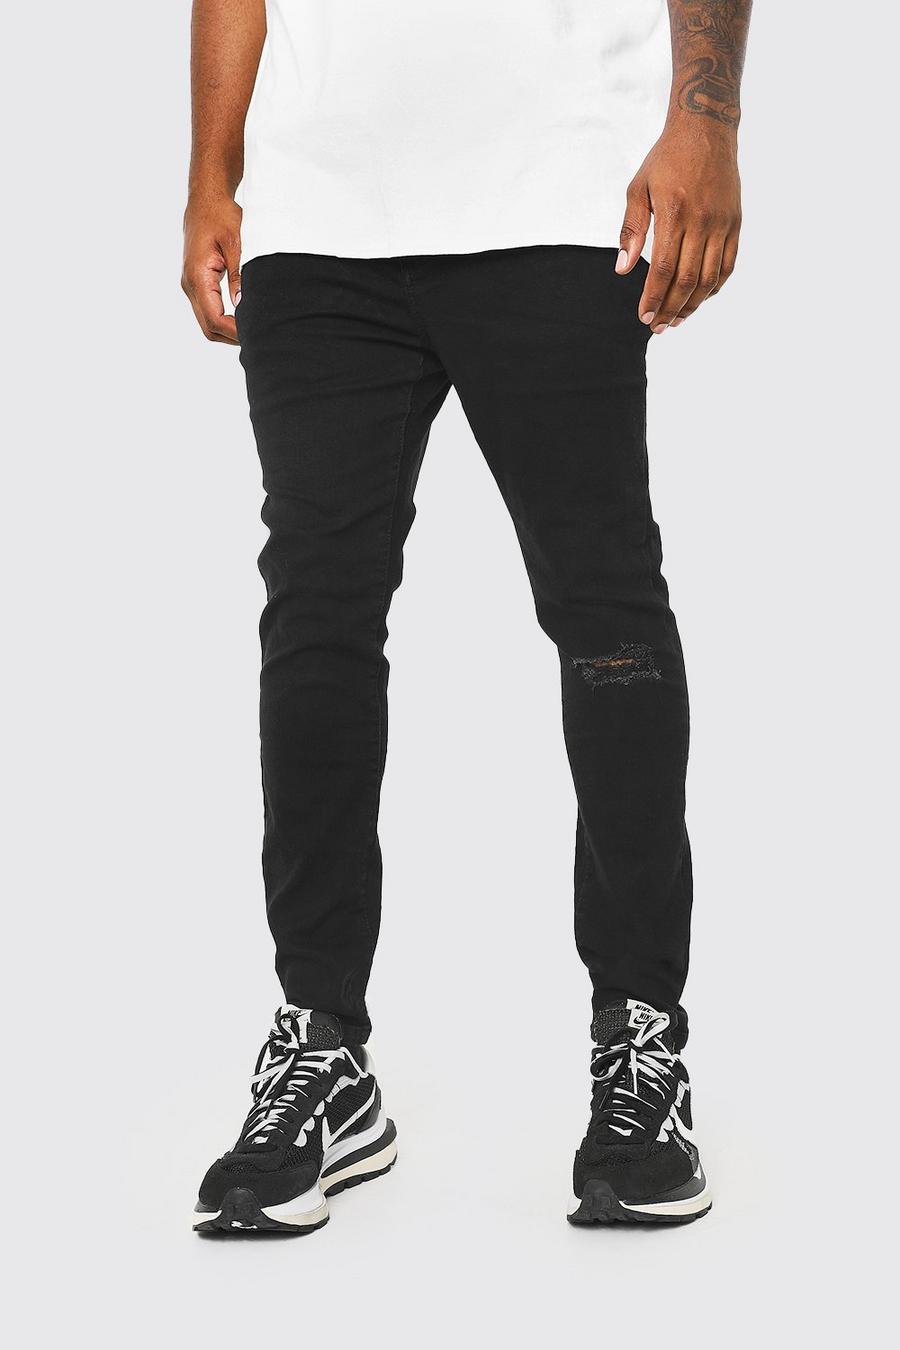 Black Plus Size Busted Knee Super Skinny Jean